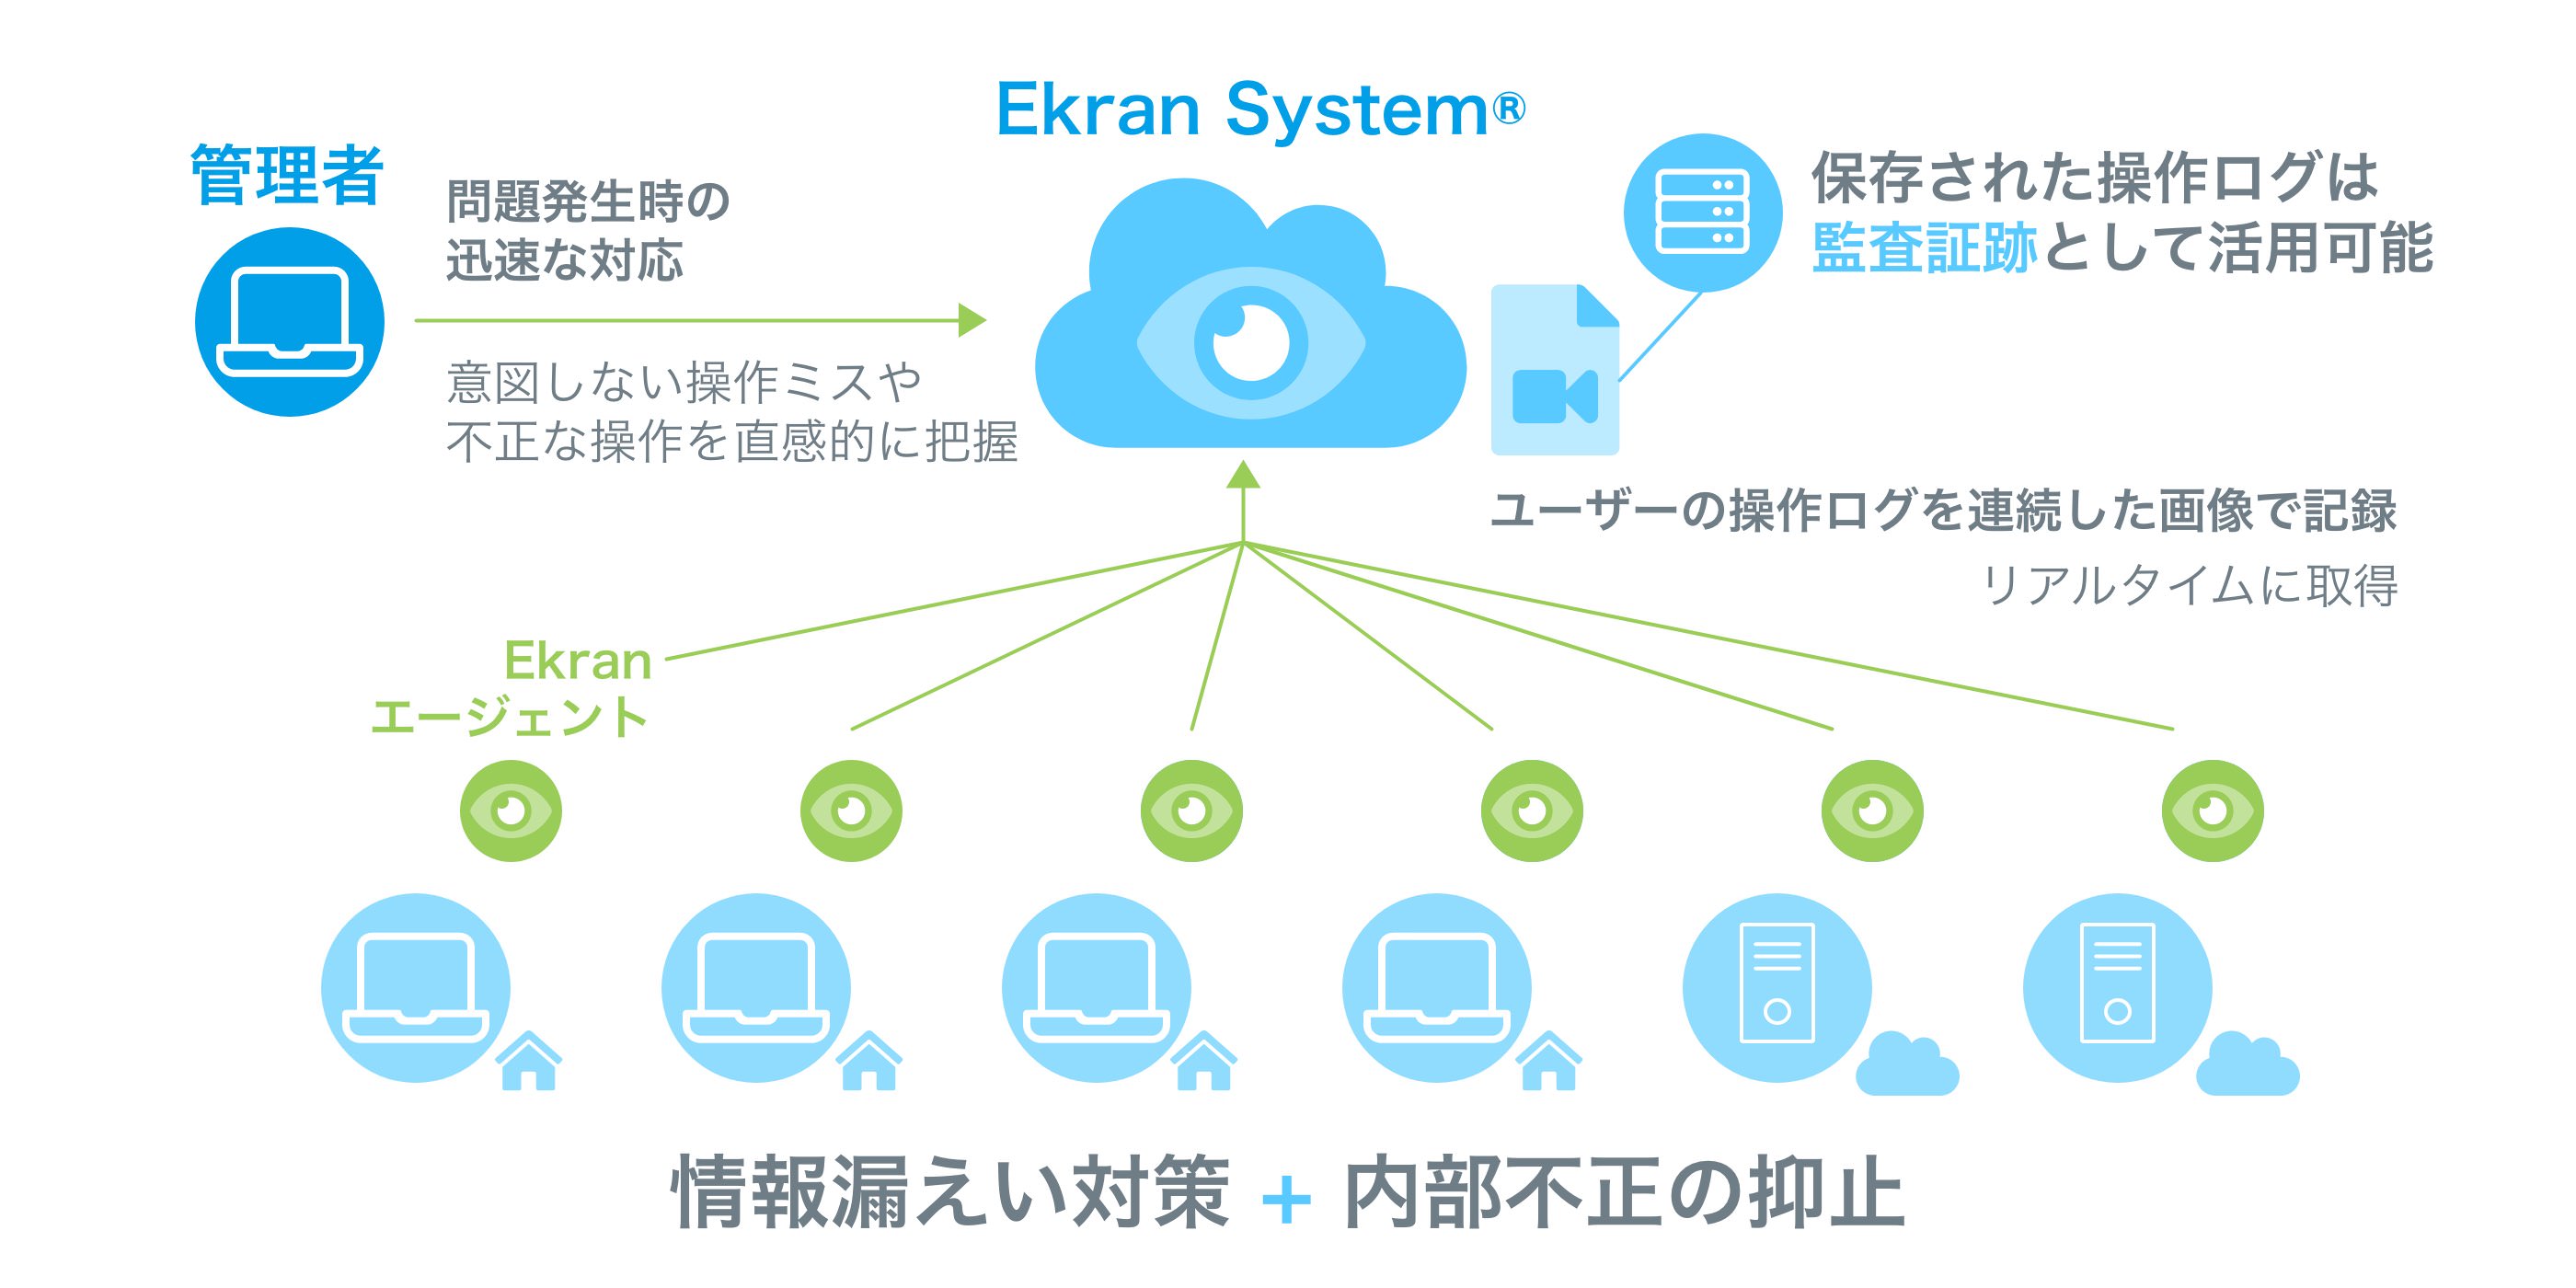 Ekran System